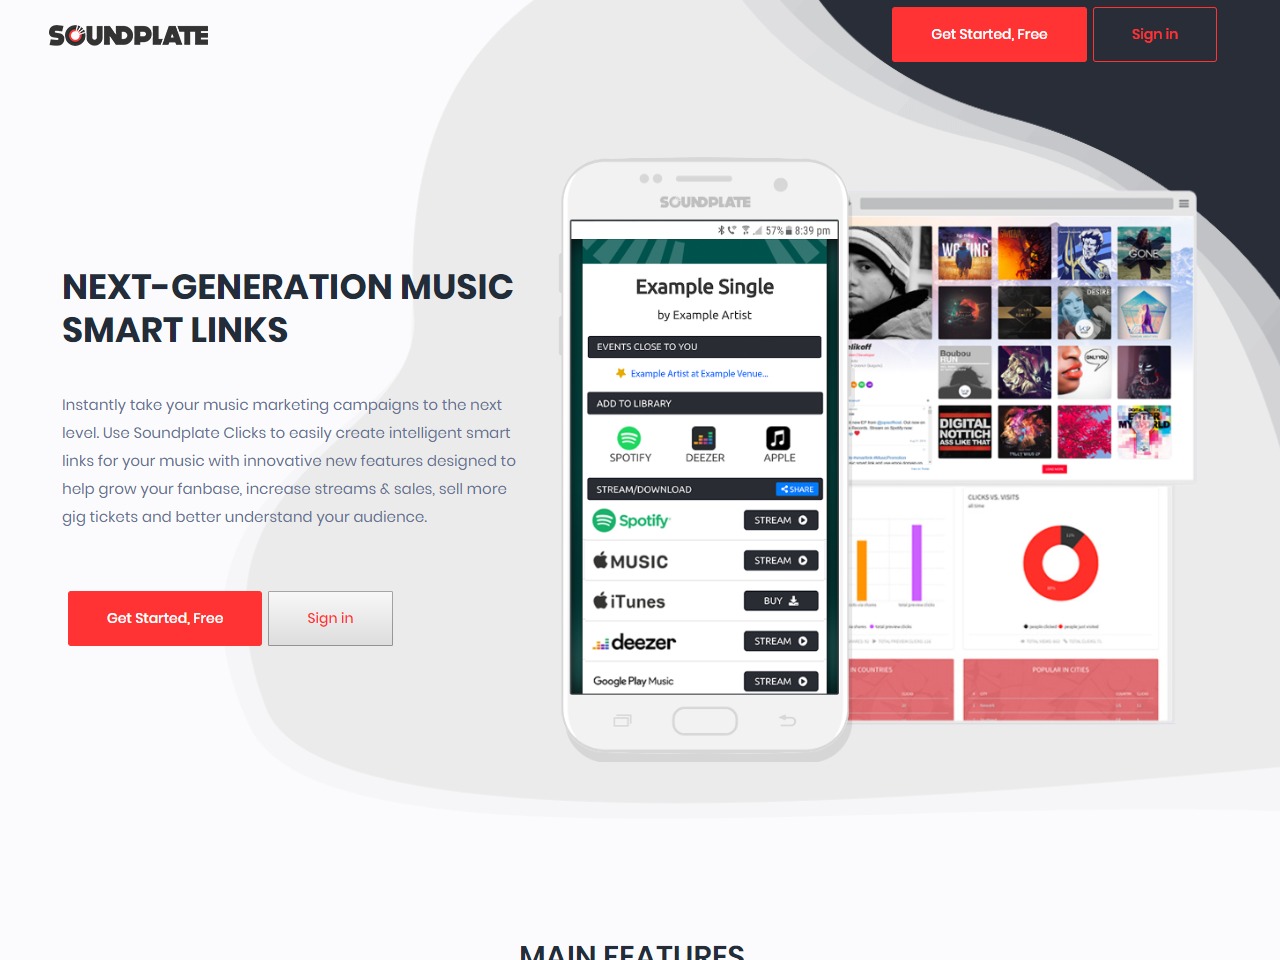 Soundplate Clicks Smart Links for Music Marketing